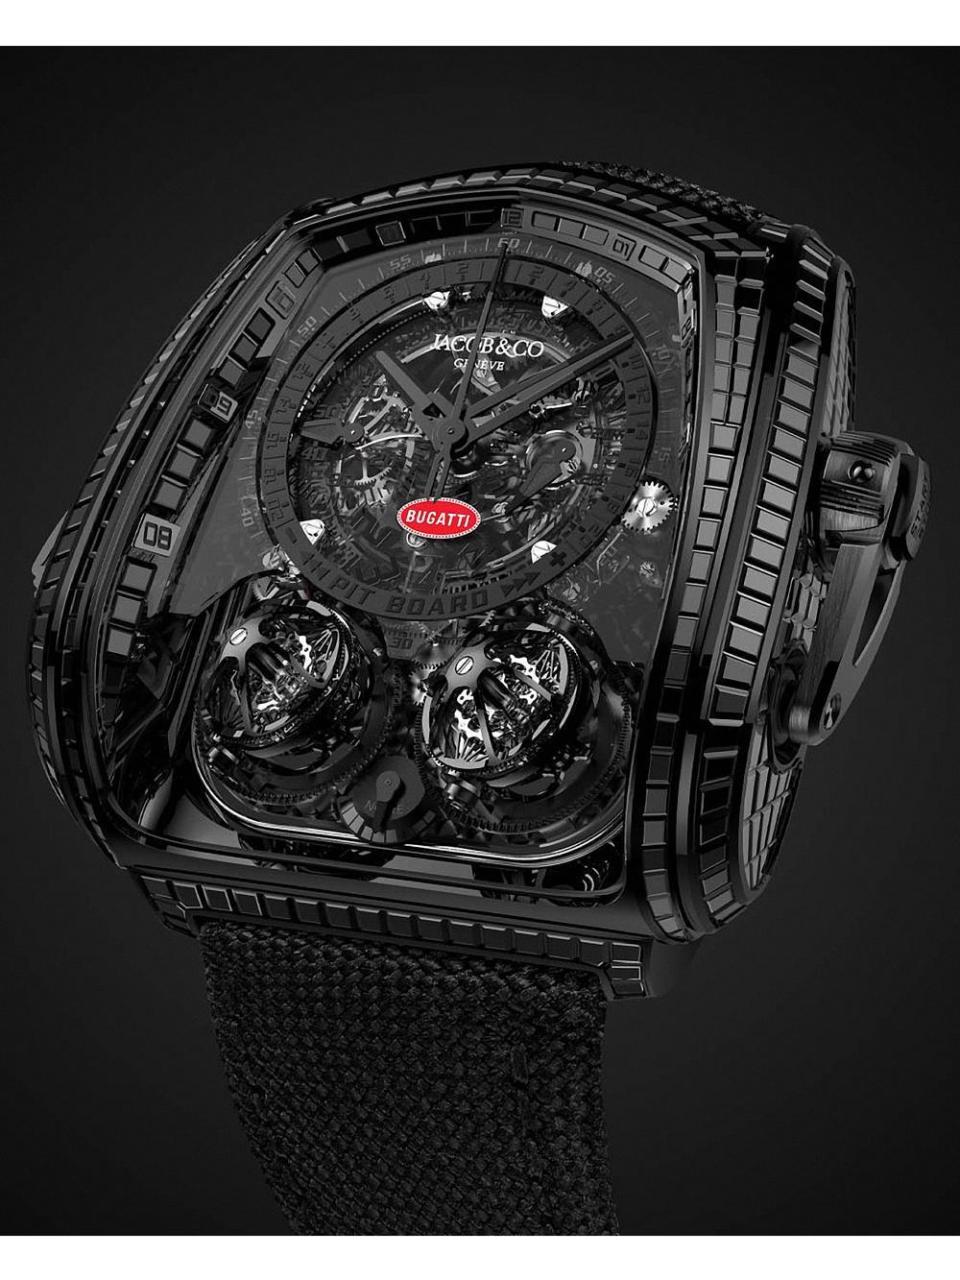 BUGATTI La Montre Noire採用了18k黑金和黑鈦作為錶殼材質。